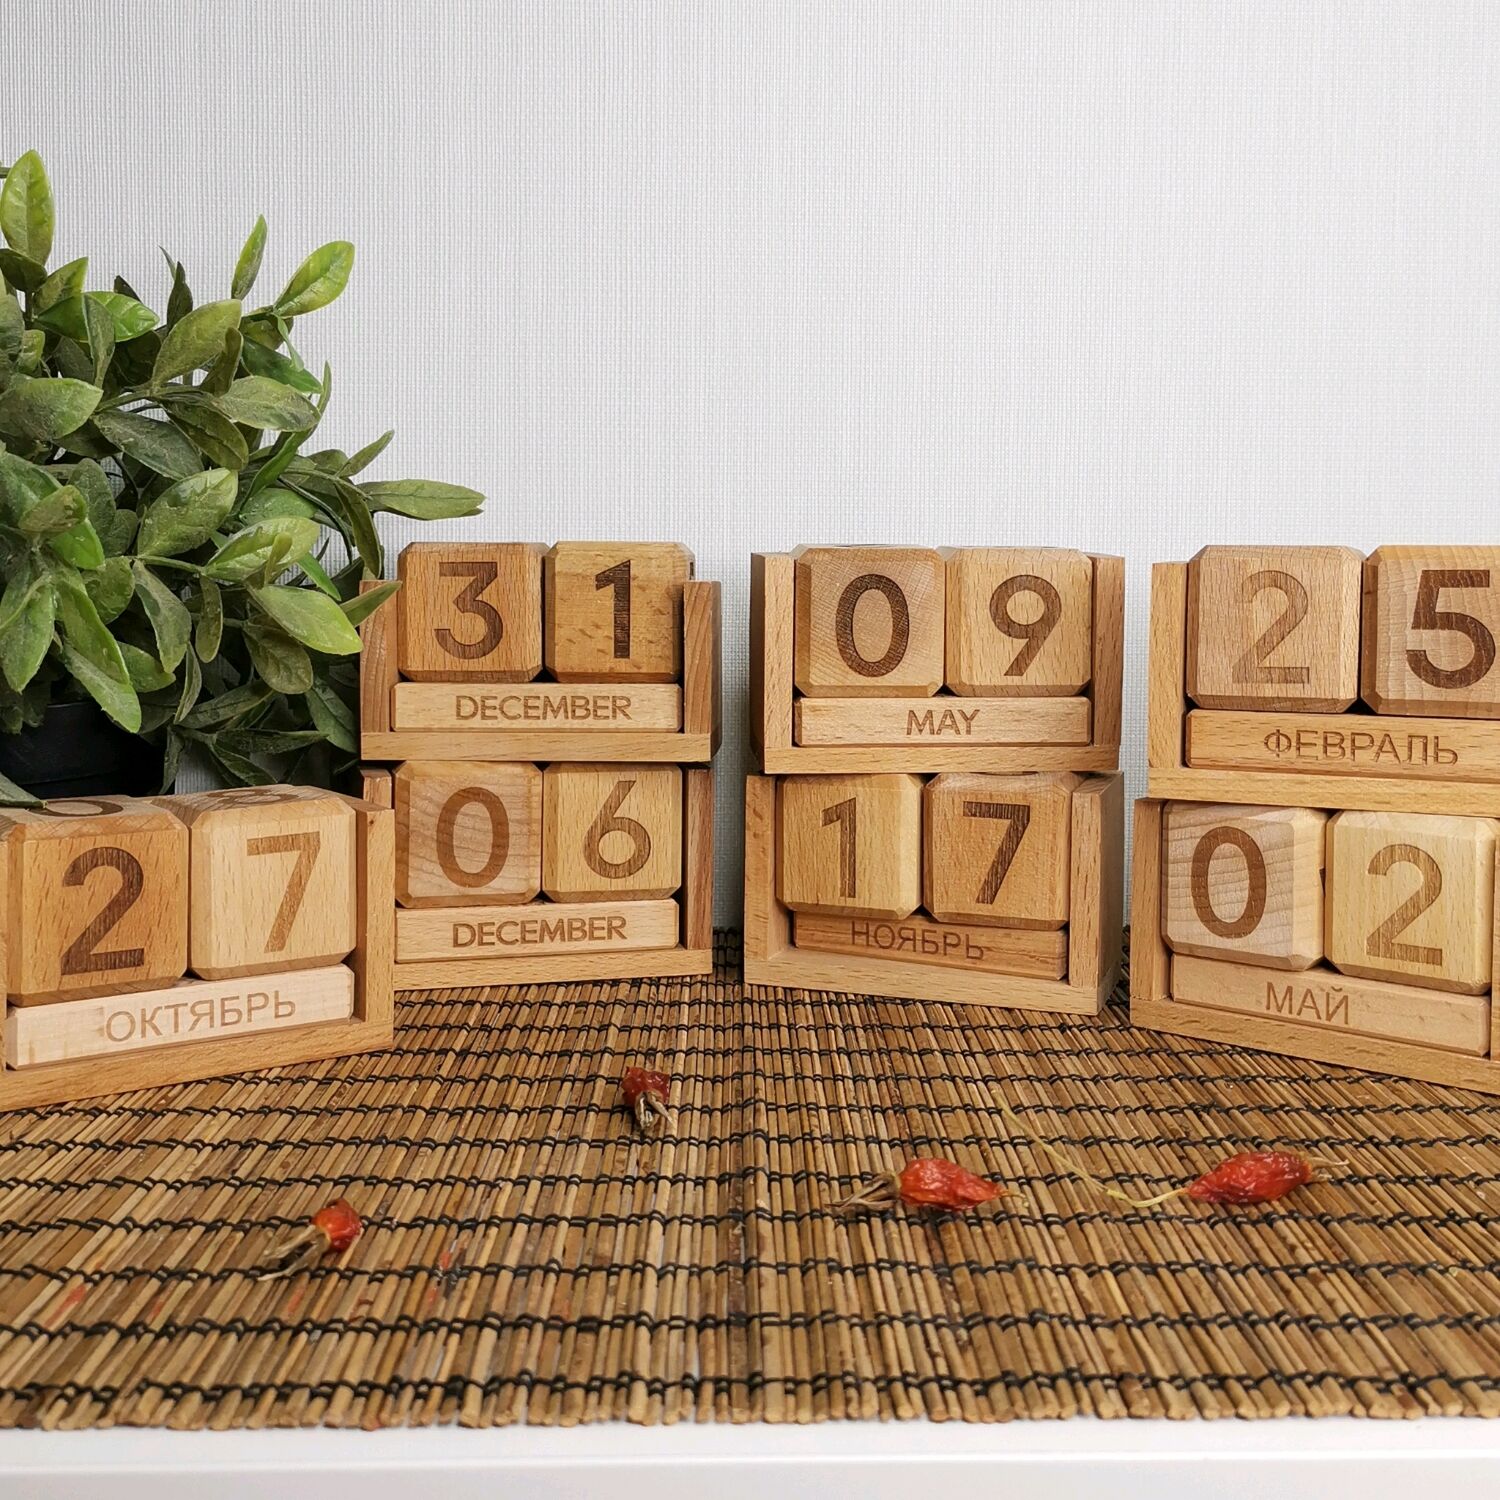 Календарь из кубиков. Деревянный календарь с кубиками. Вечный календарь из дерева кубики. Календарь деревянный настольный. Календарь деревянный кубики домик.